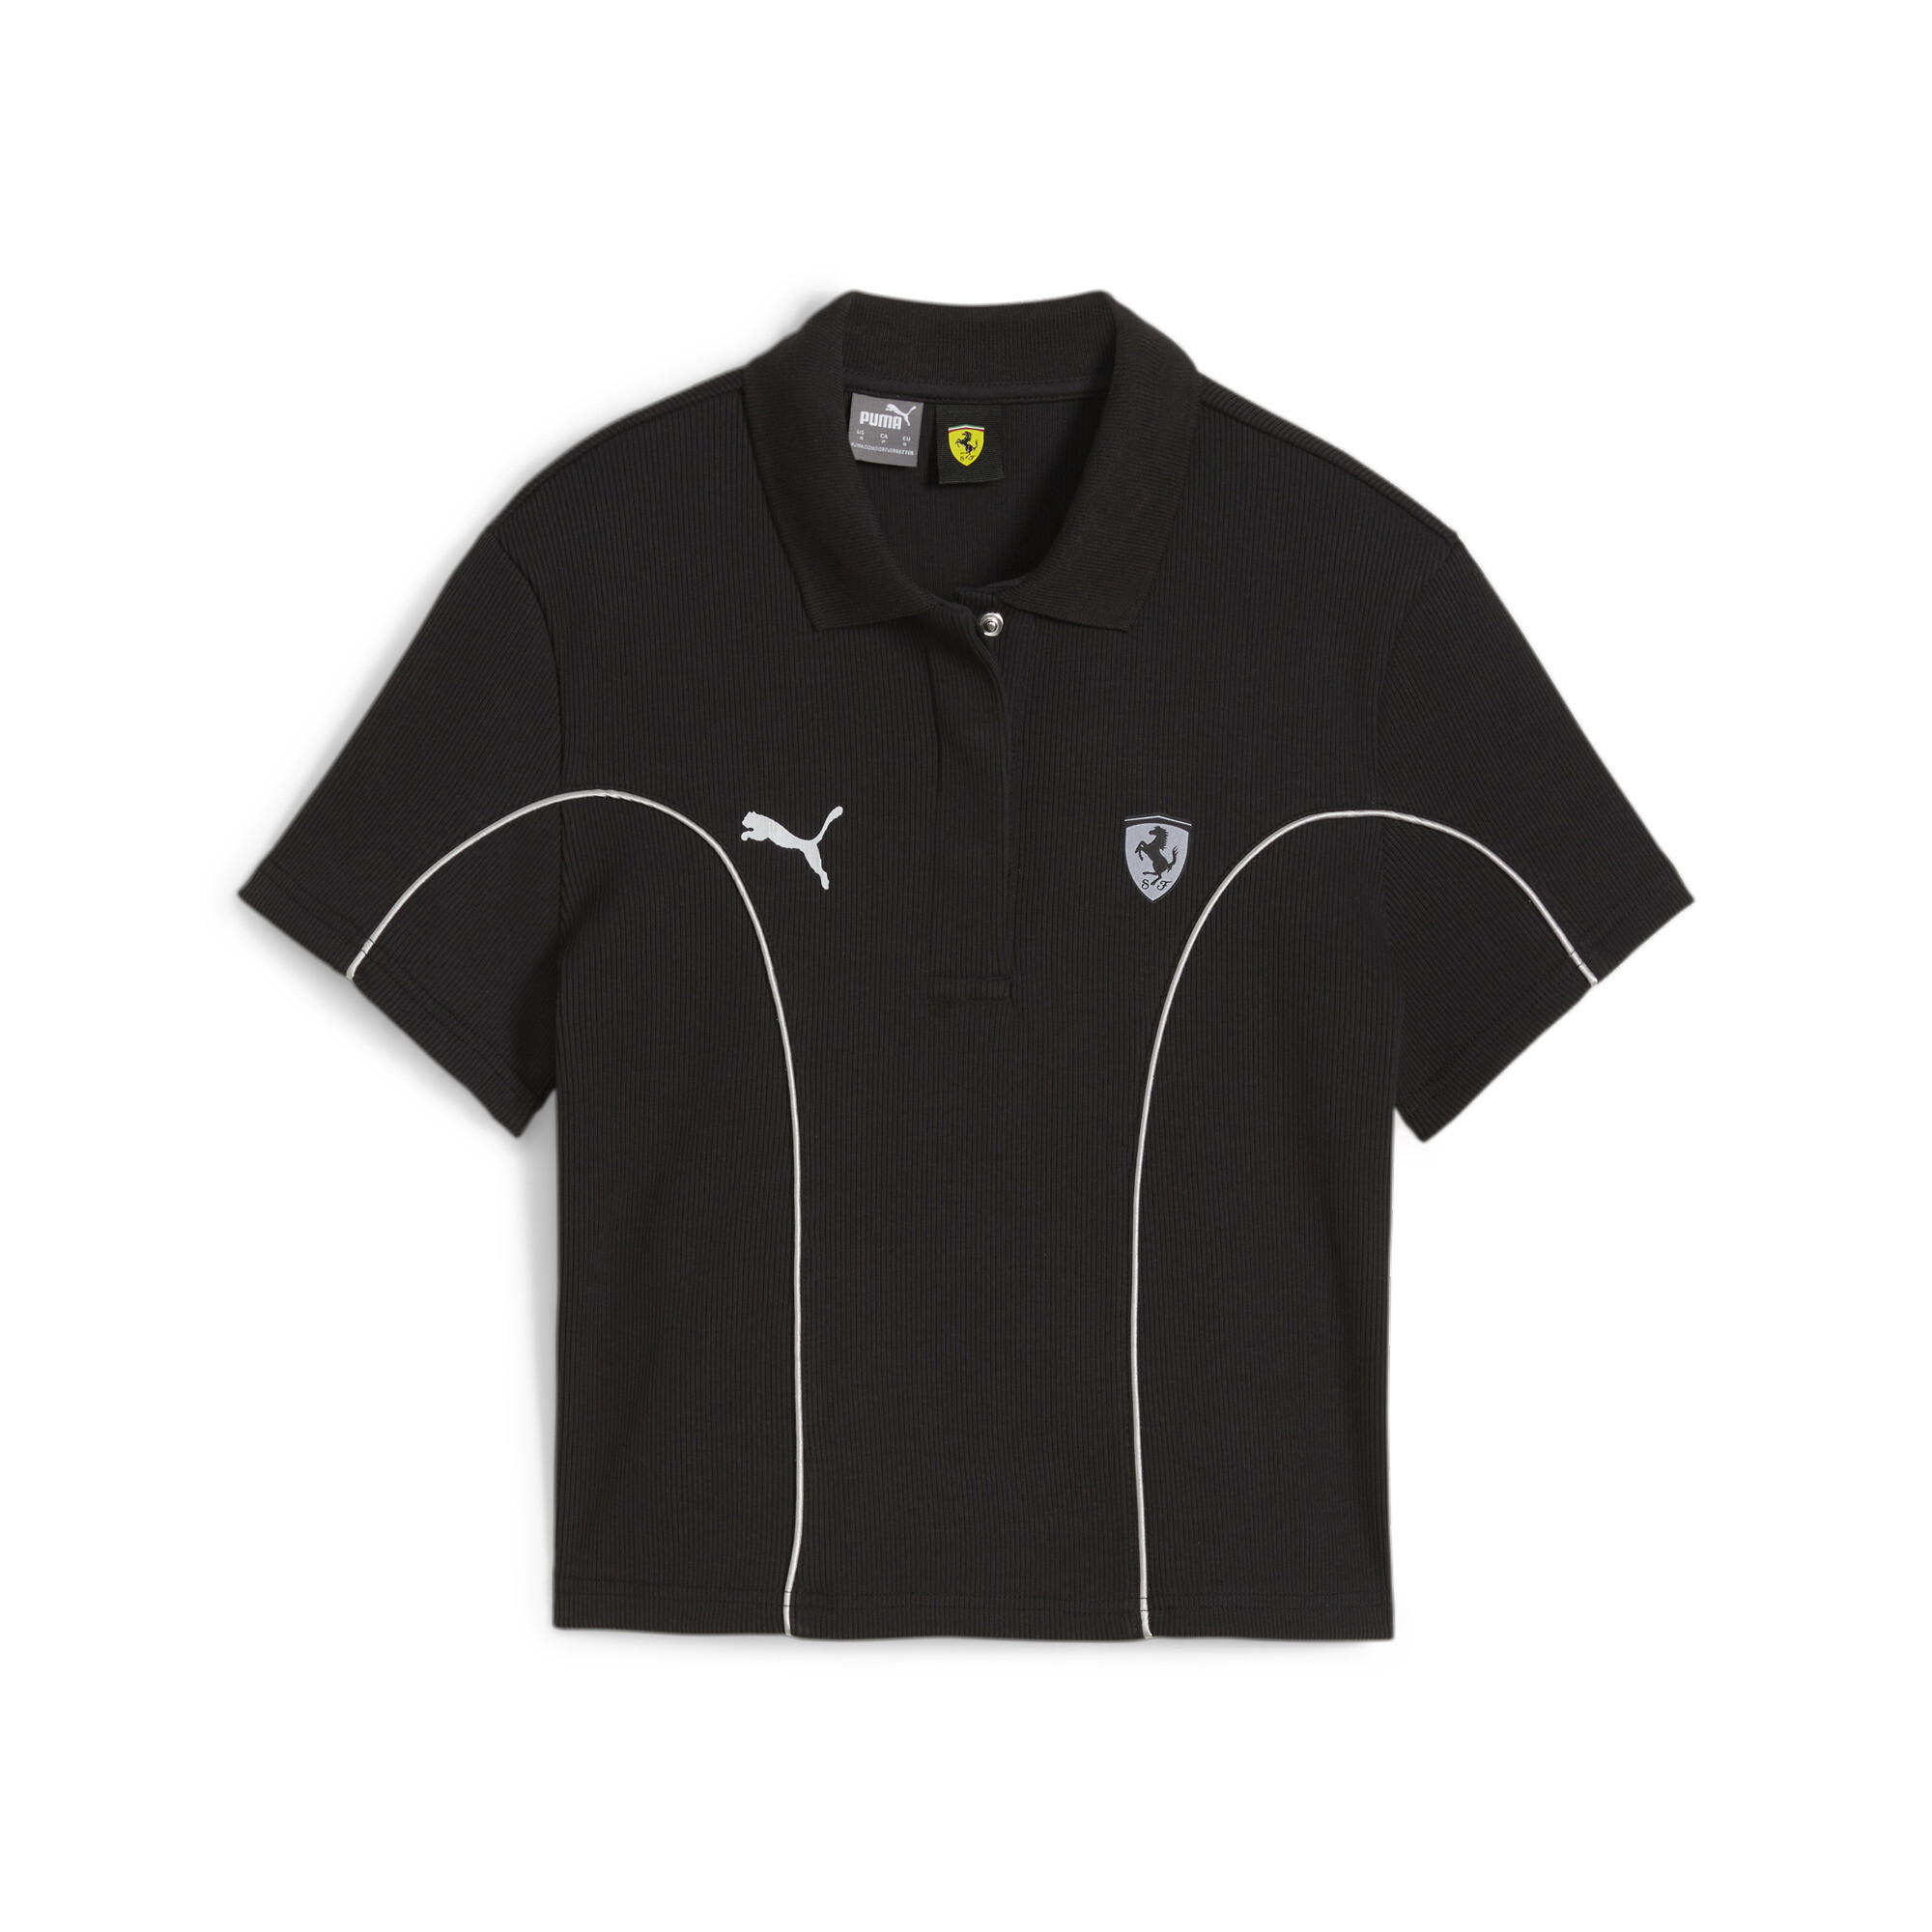 Women's Puma Scuderia Ferrari Style's Motorsport Polo T-Shirt, Black T-Shirt, Size L T-Shirt, Clothing